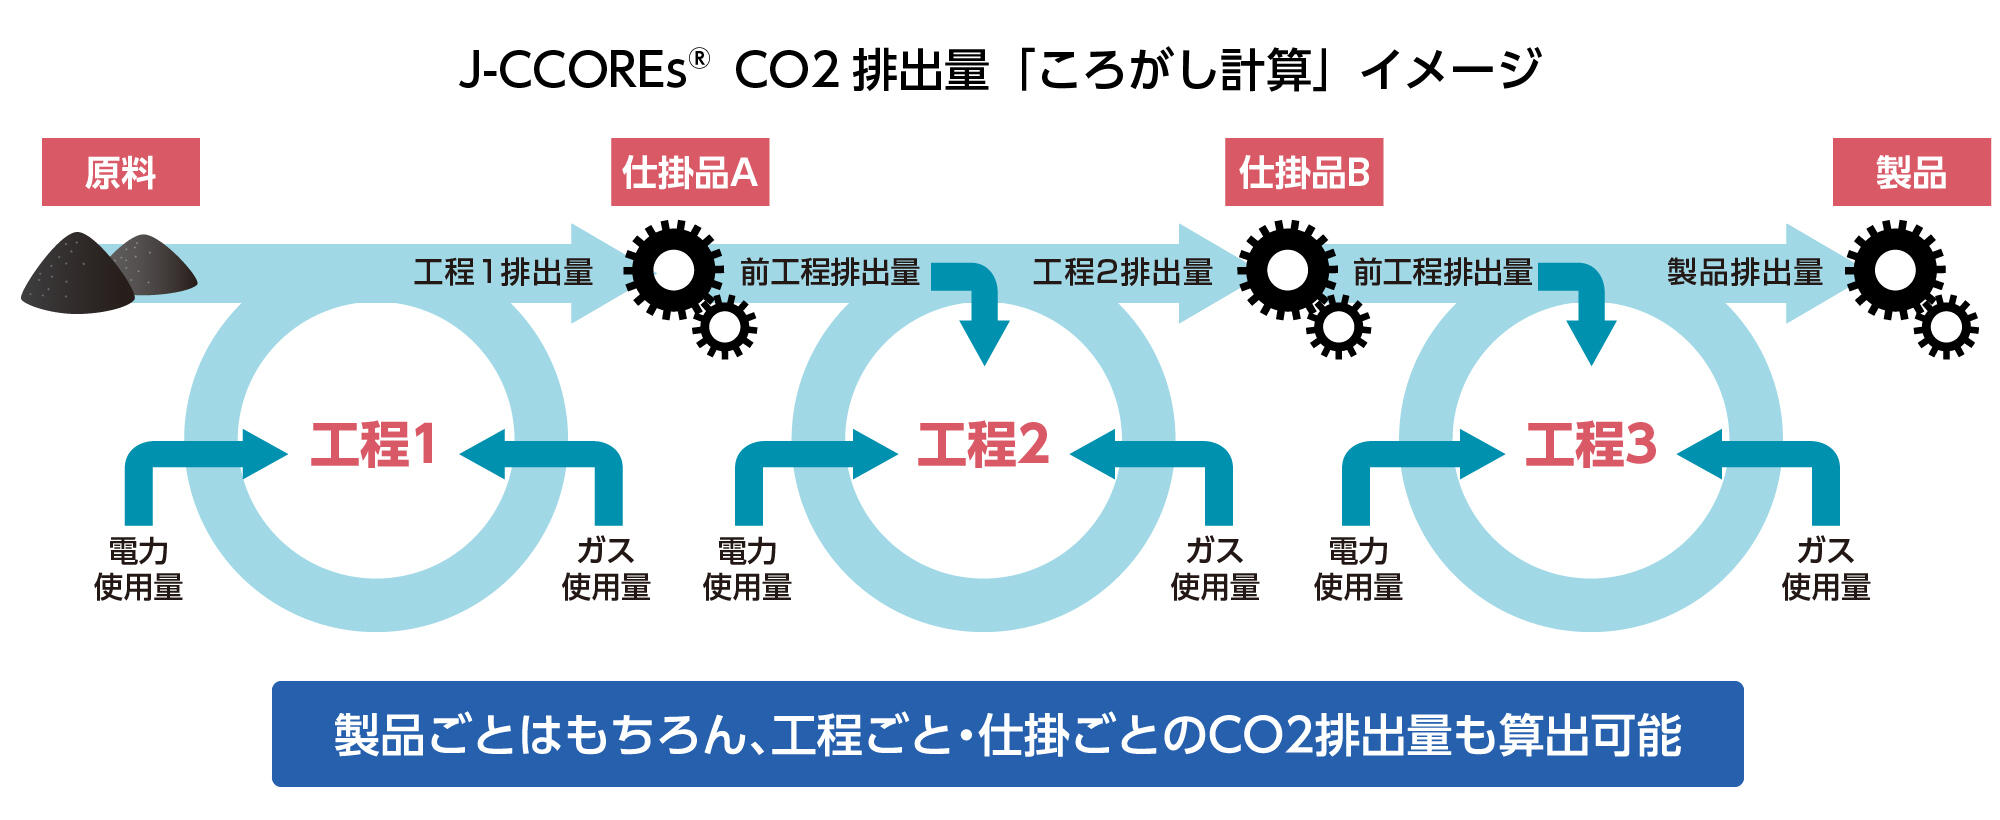 J-CCOREs<sup>®</sup> CO2排出量「ころがし計算」イメージ